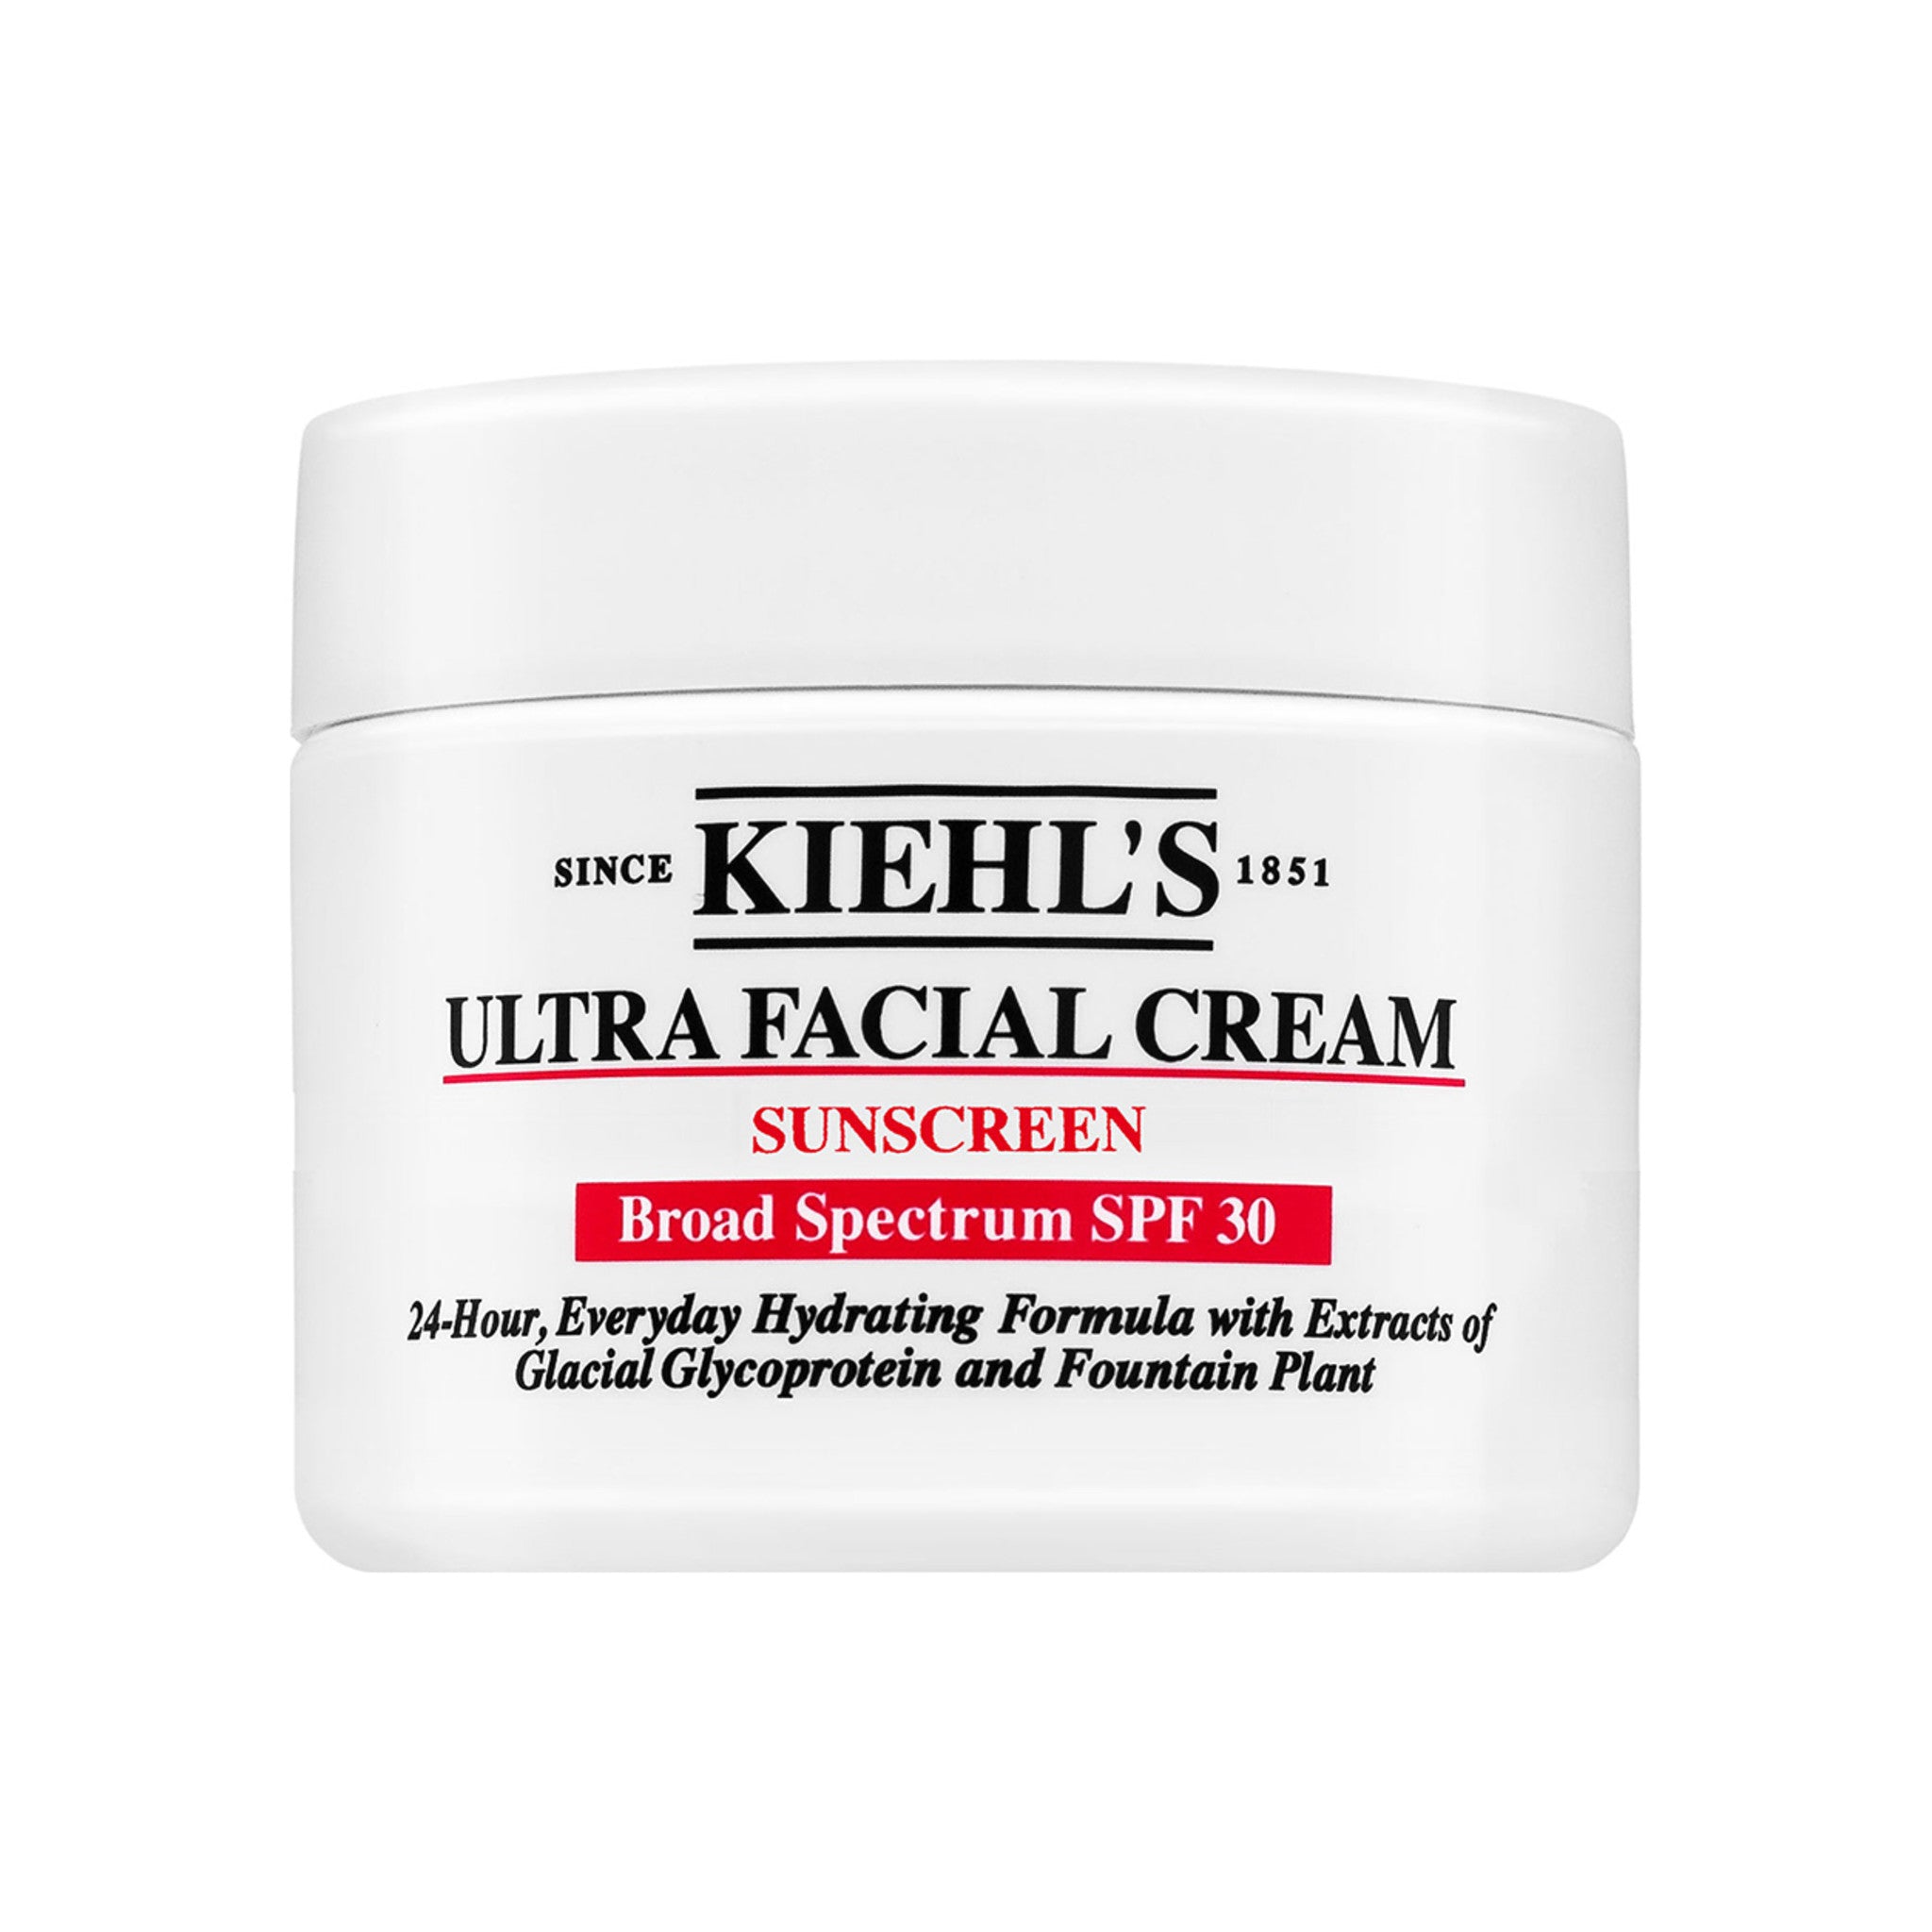 Kiehl's Since 1851 Ultra Facial Cream SPF 30 Size variant: 50 ml main image.